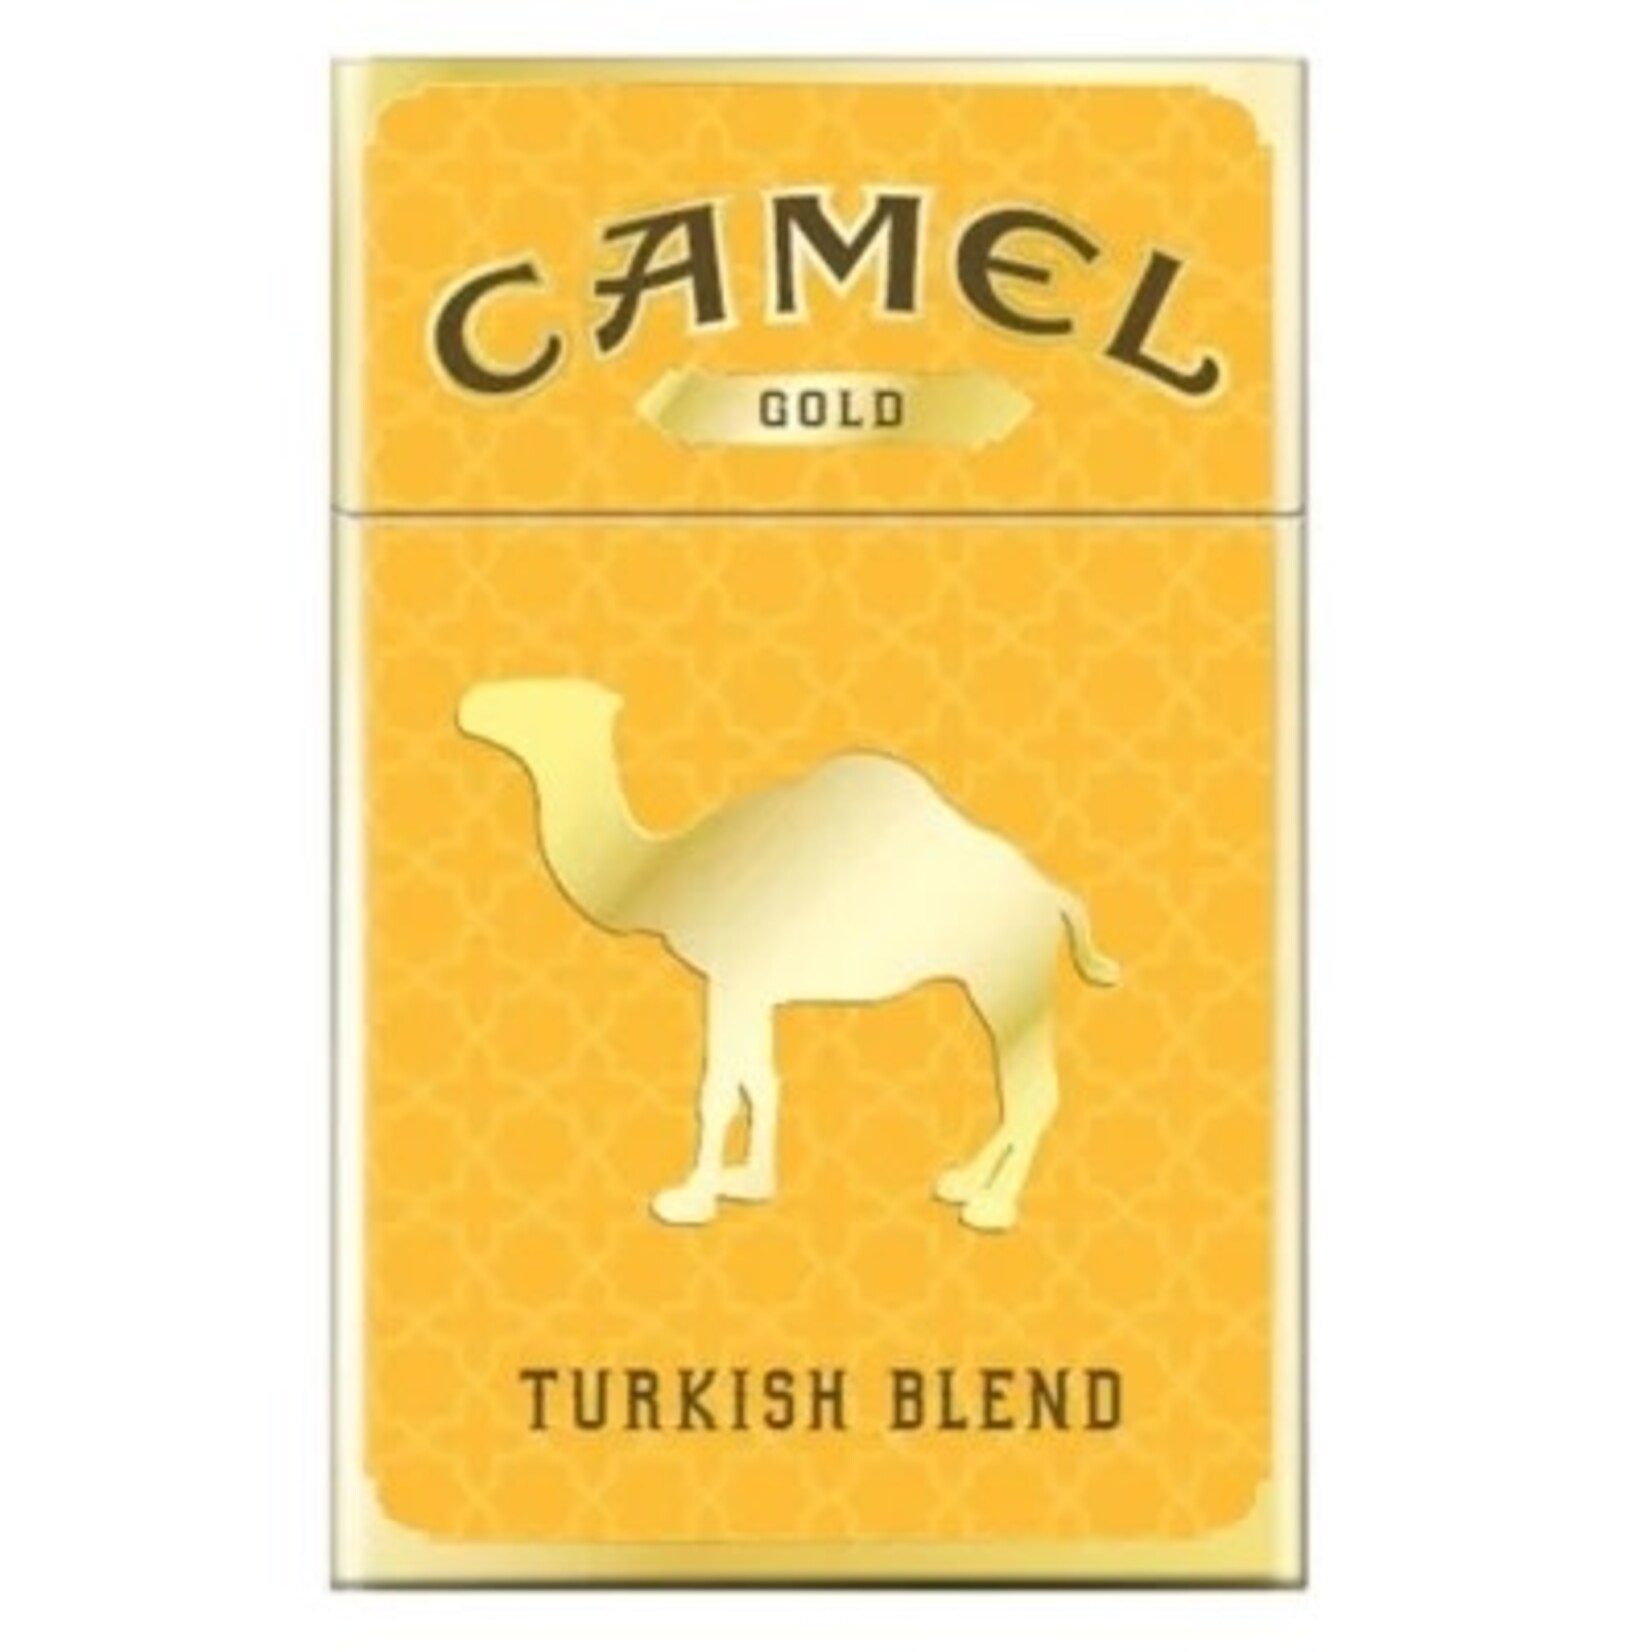 Camel Camel Gold Box